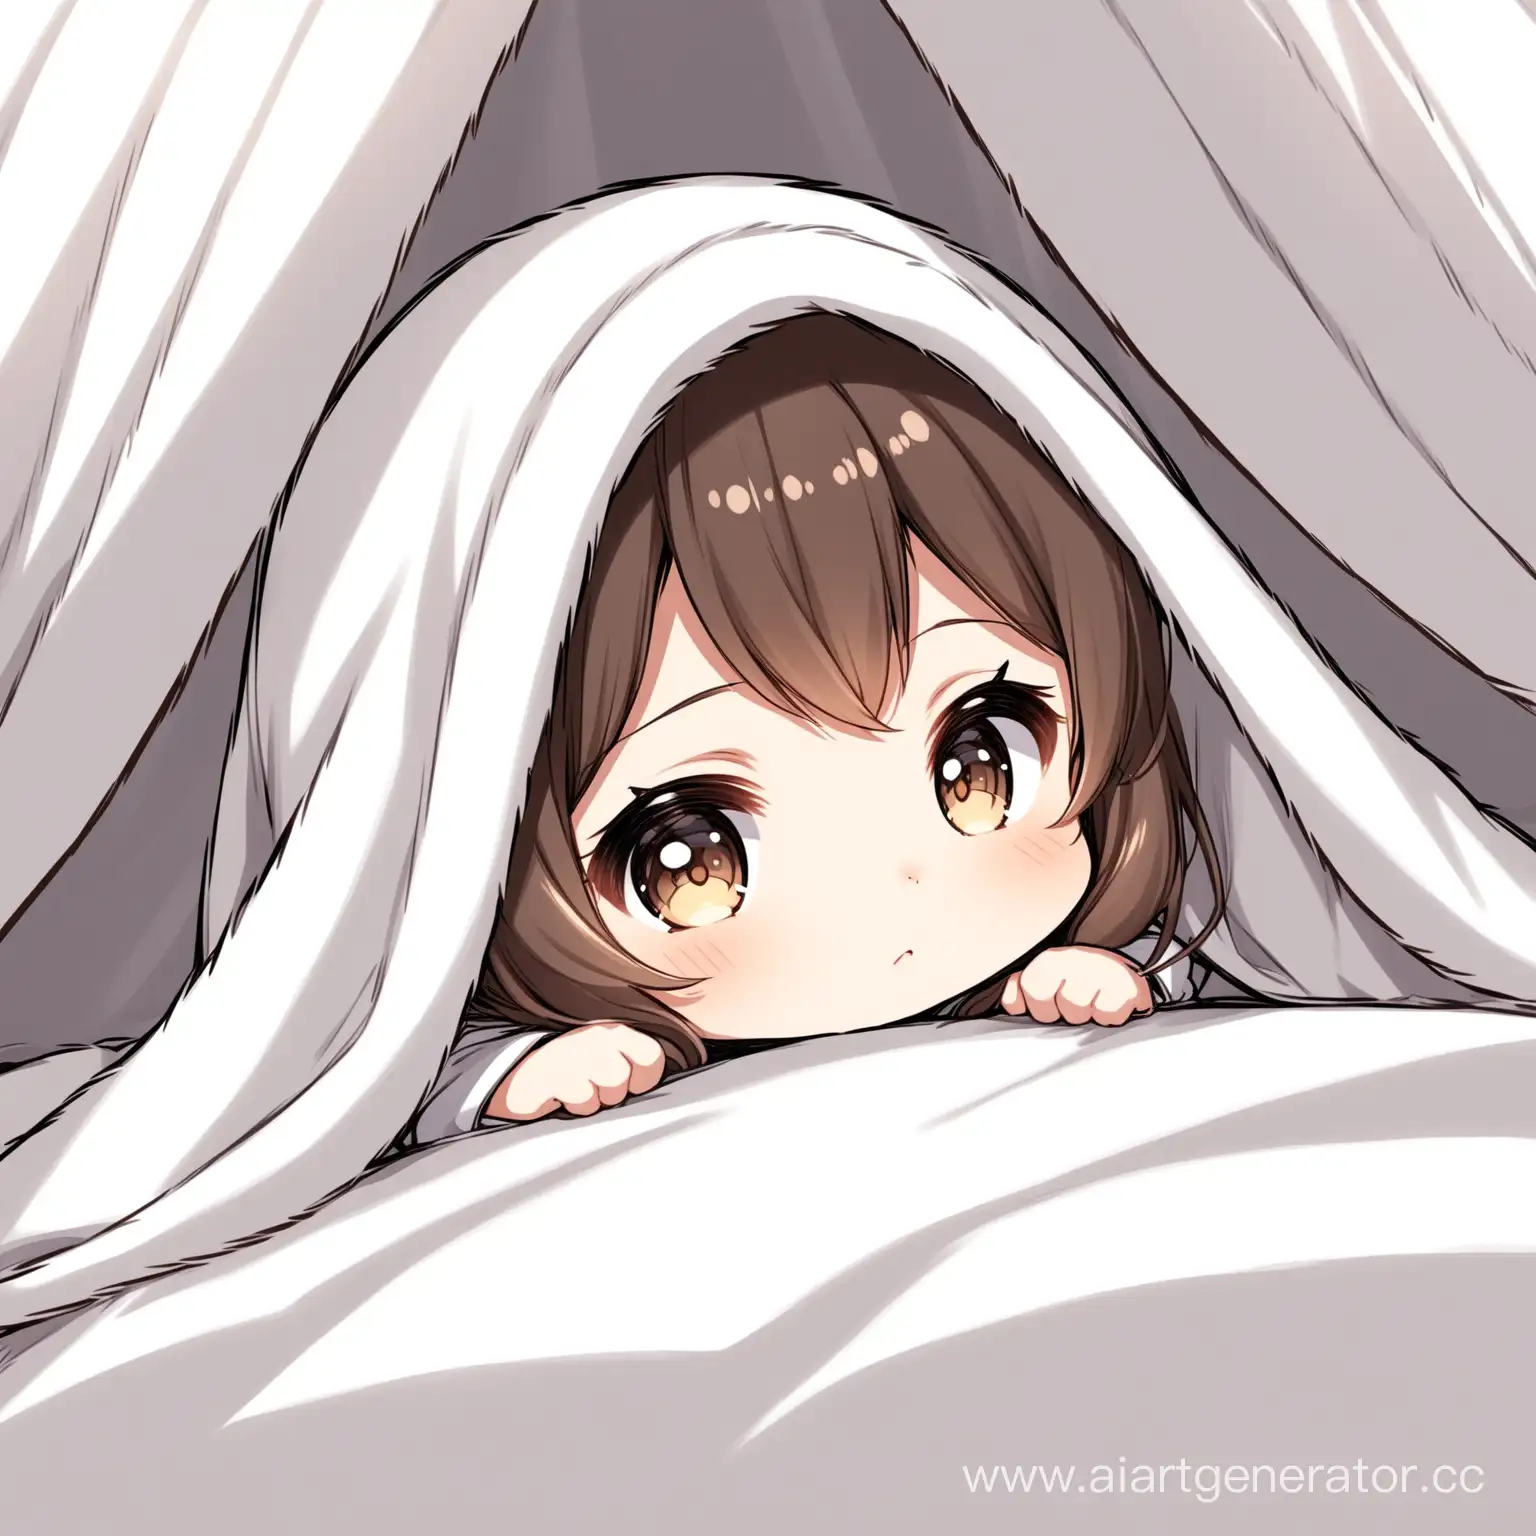 Adorable-Anime-Chibi-Girl-Lying-Under-a-Cozy-Blanket